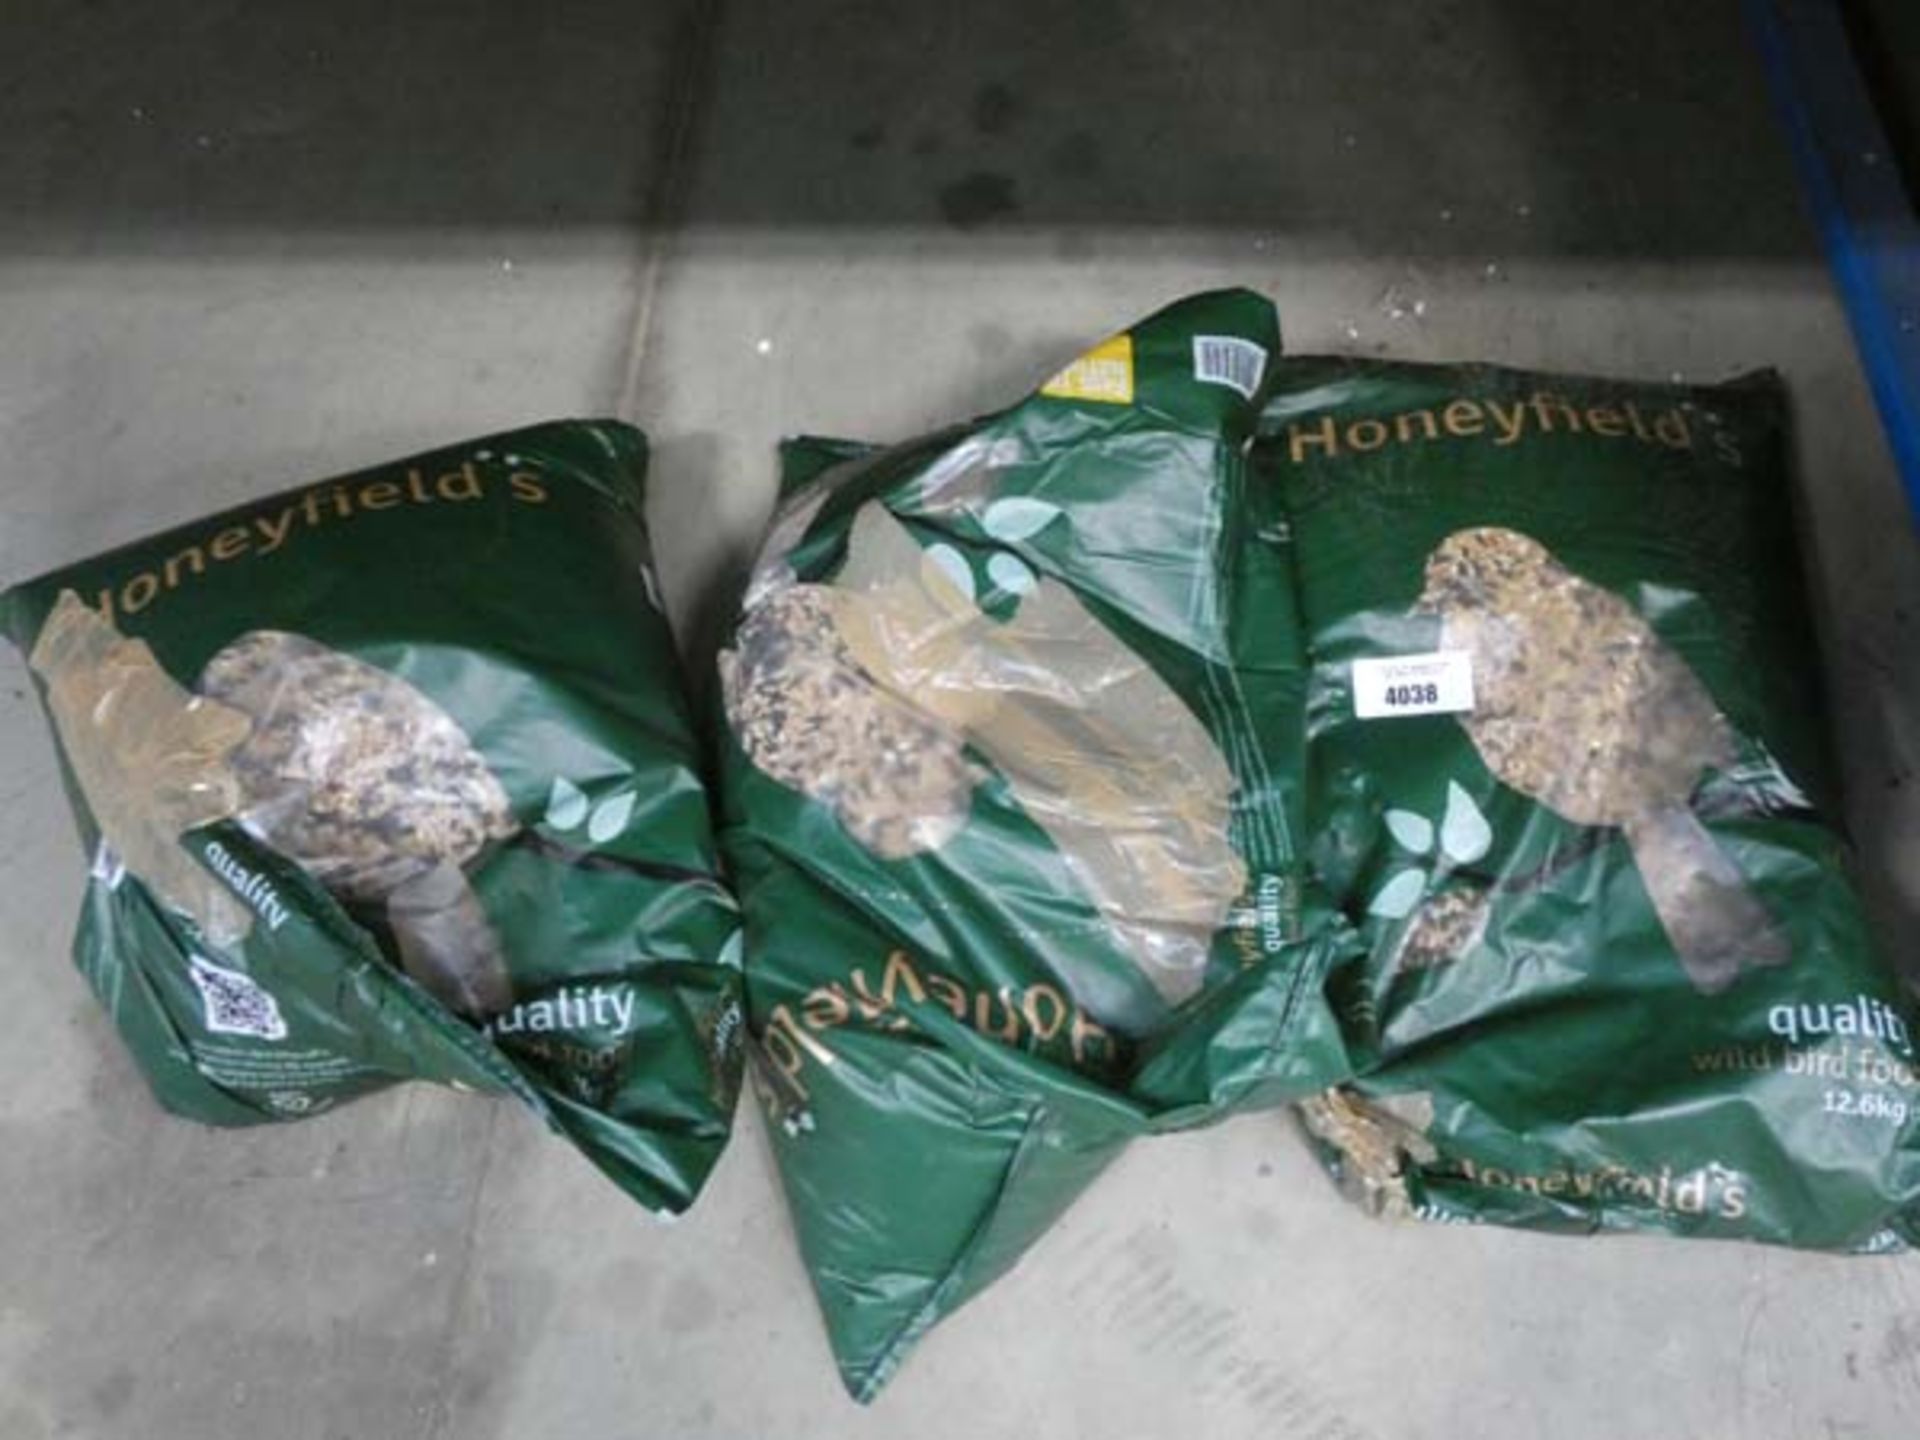 3 bags of Honeyfields bird food